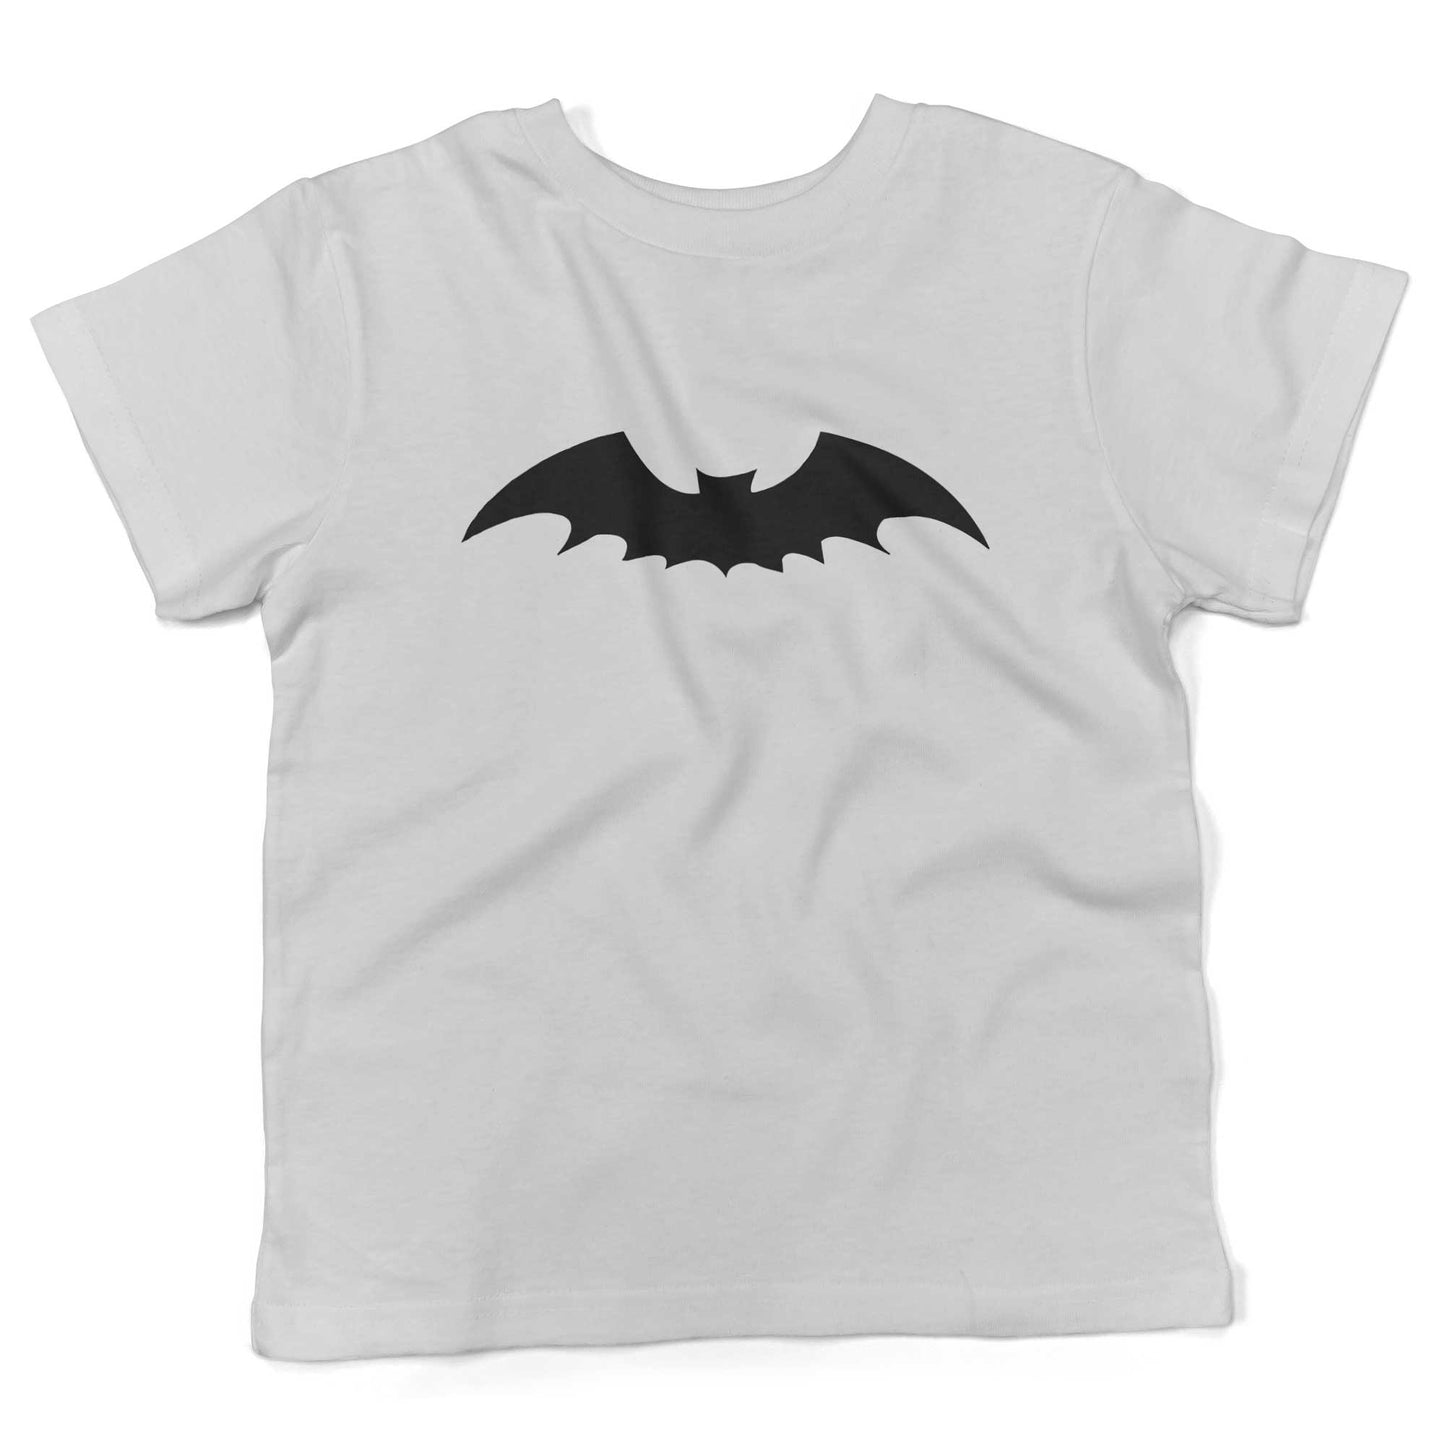 Gothic Bat Toddler Shirt-White-2T